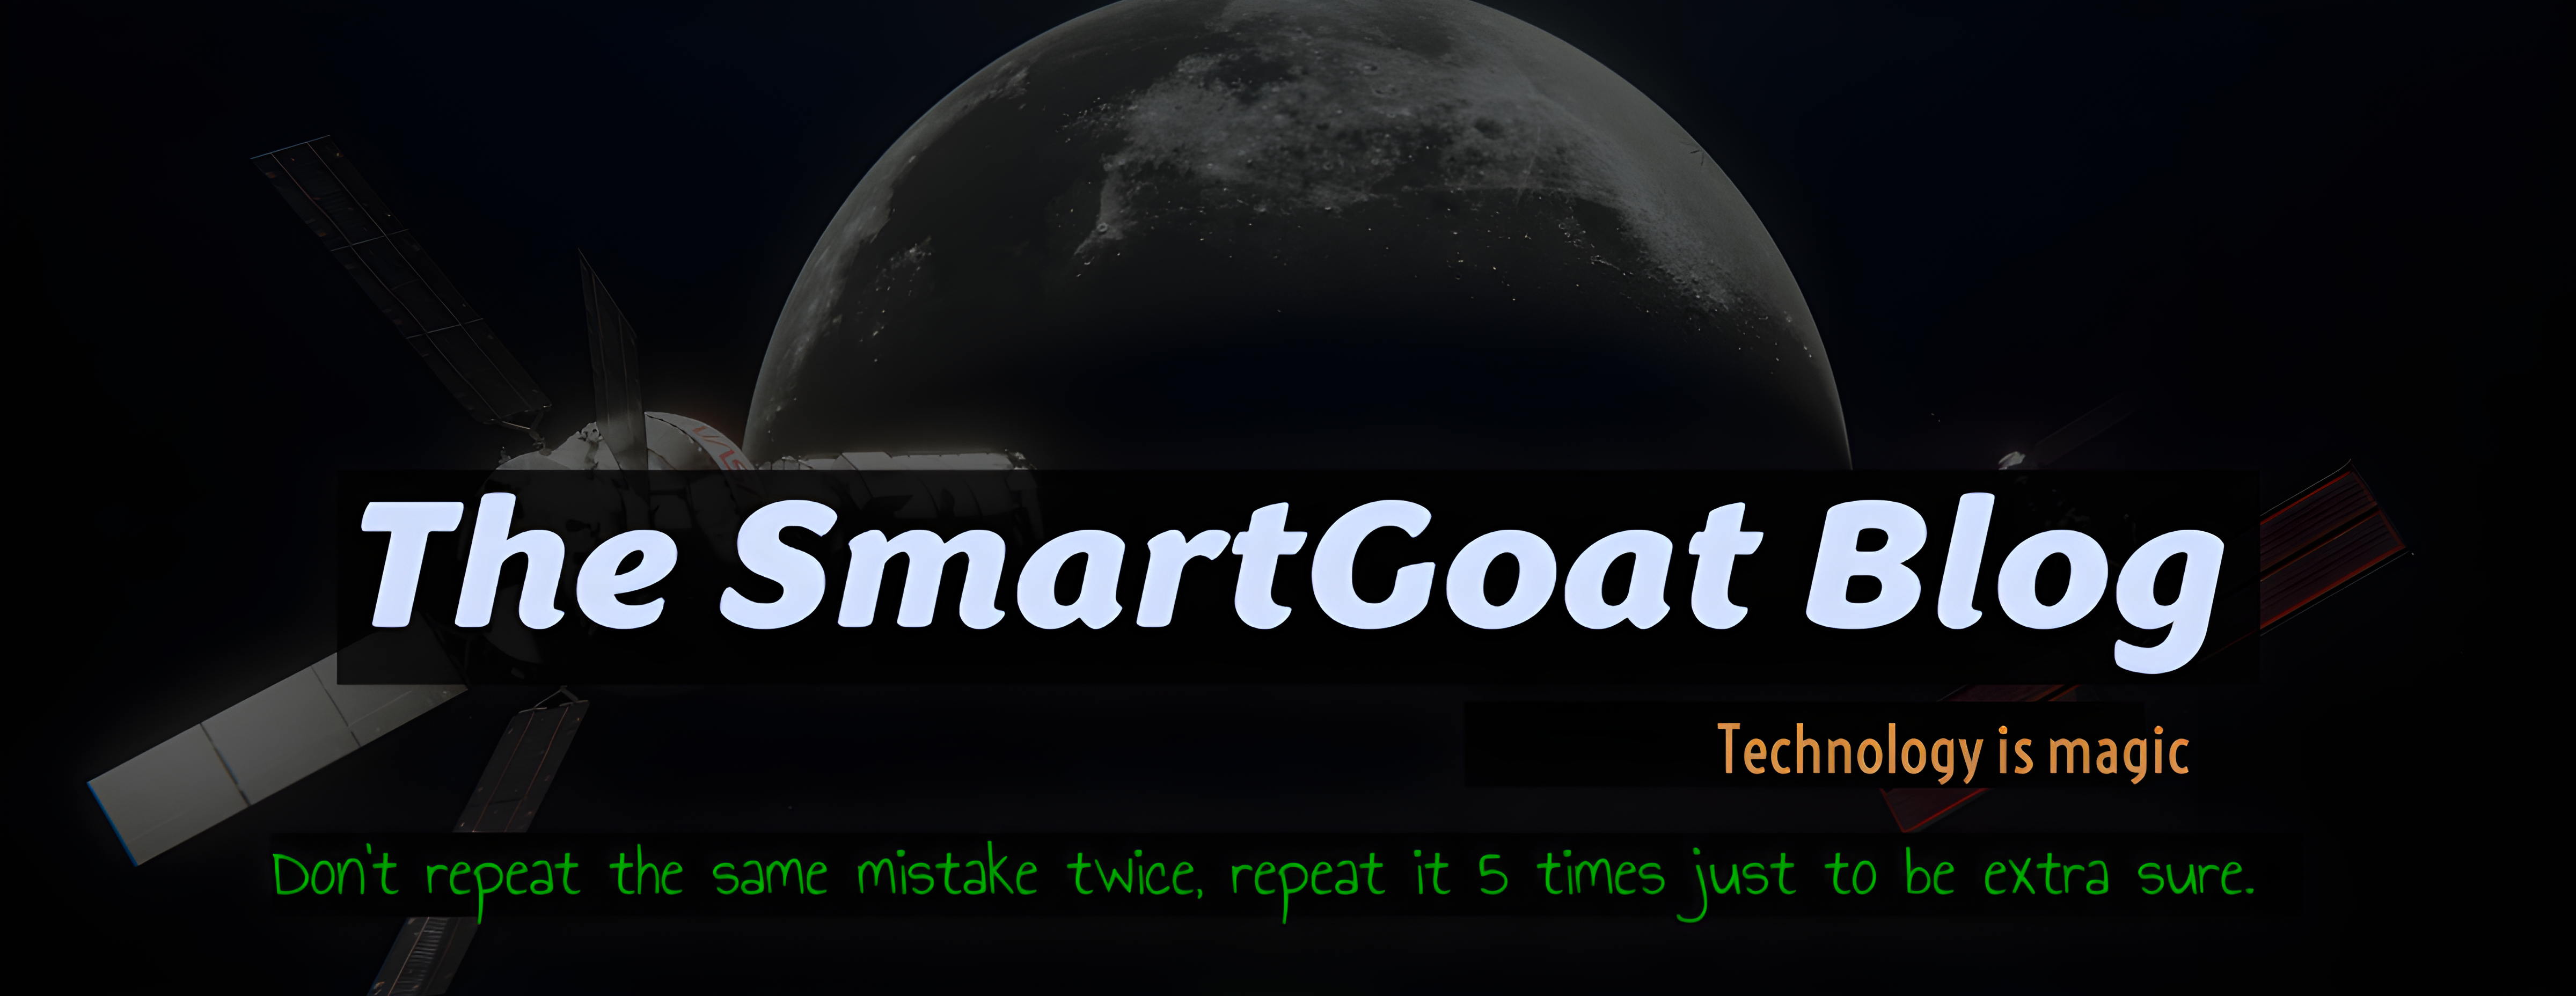 smartgoat-hero-image